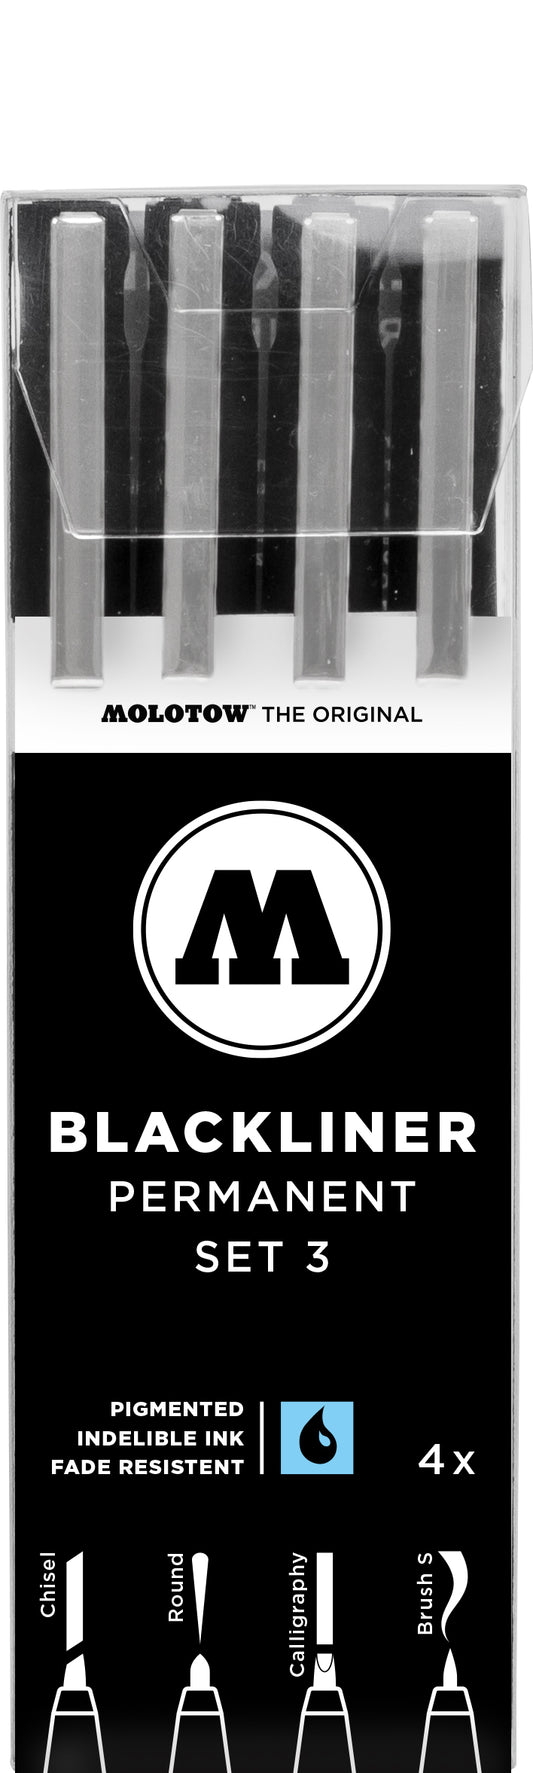 Blackliner Permanent Set 3 - 4 markers